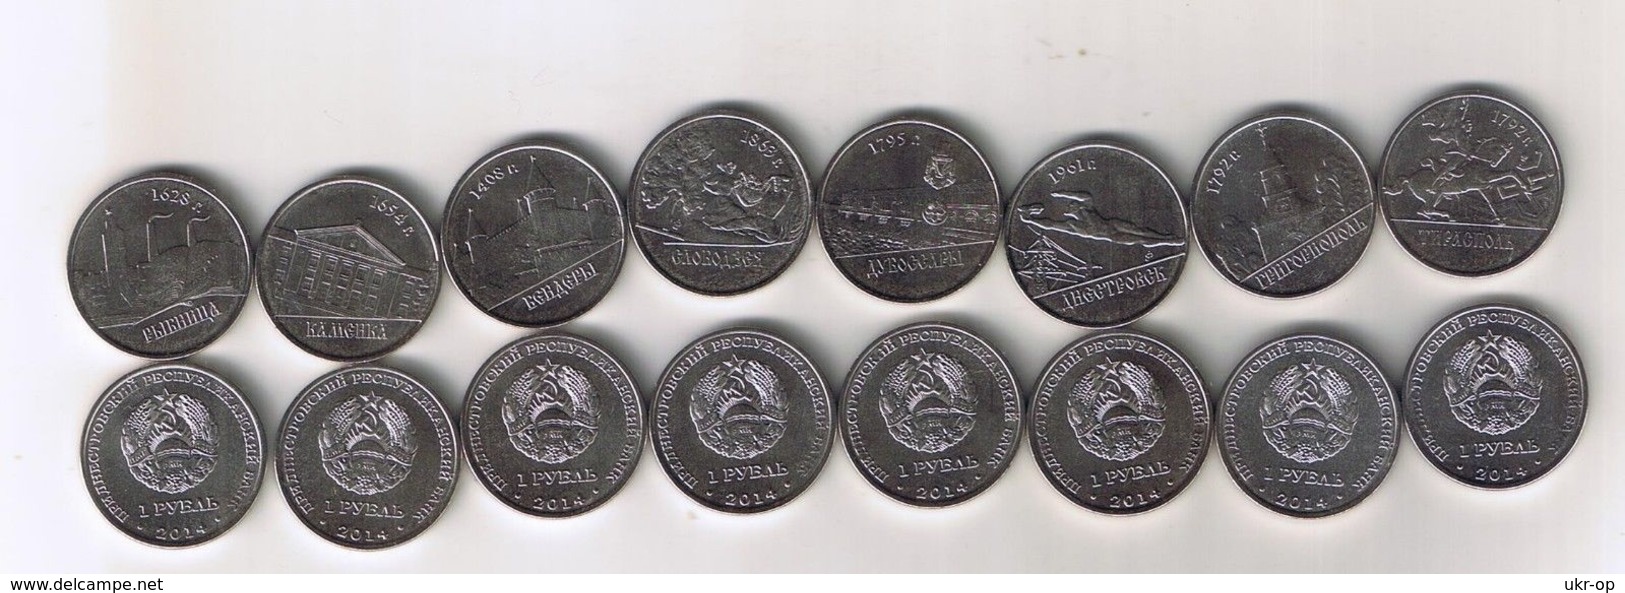 Transnistria - 1 Ruble Set 8 Coins 2014 UNC Ukr-OP - Moldova